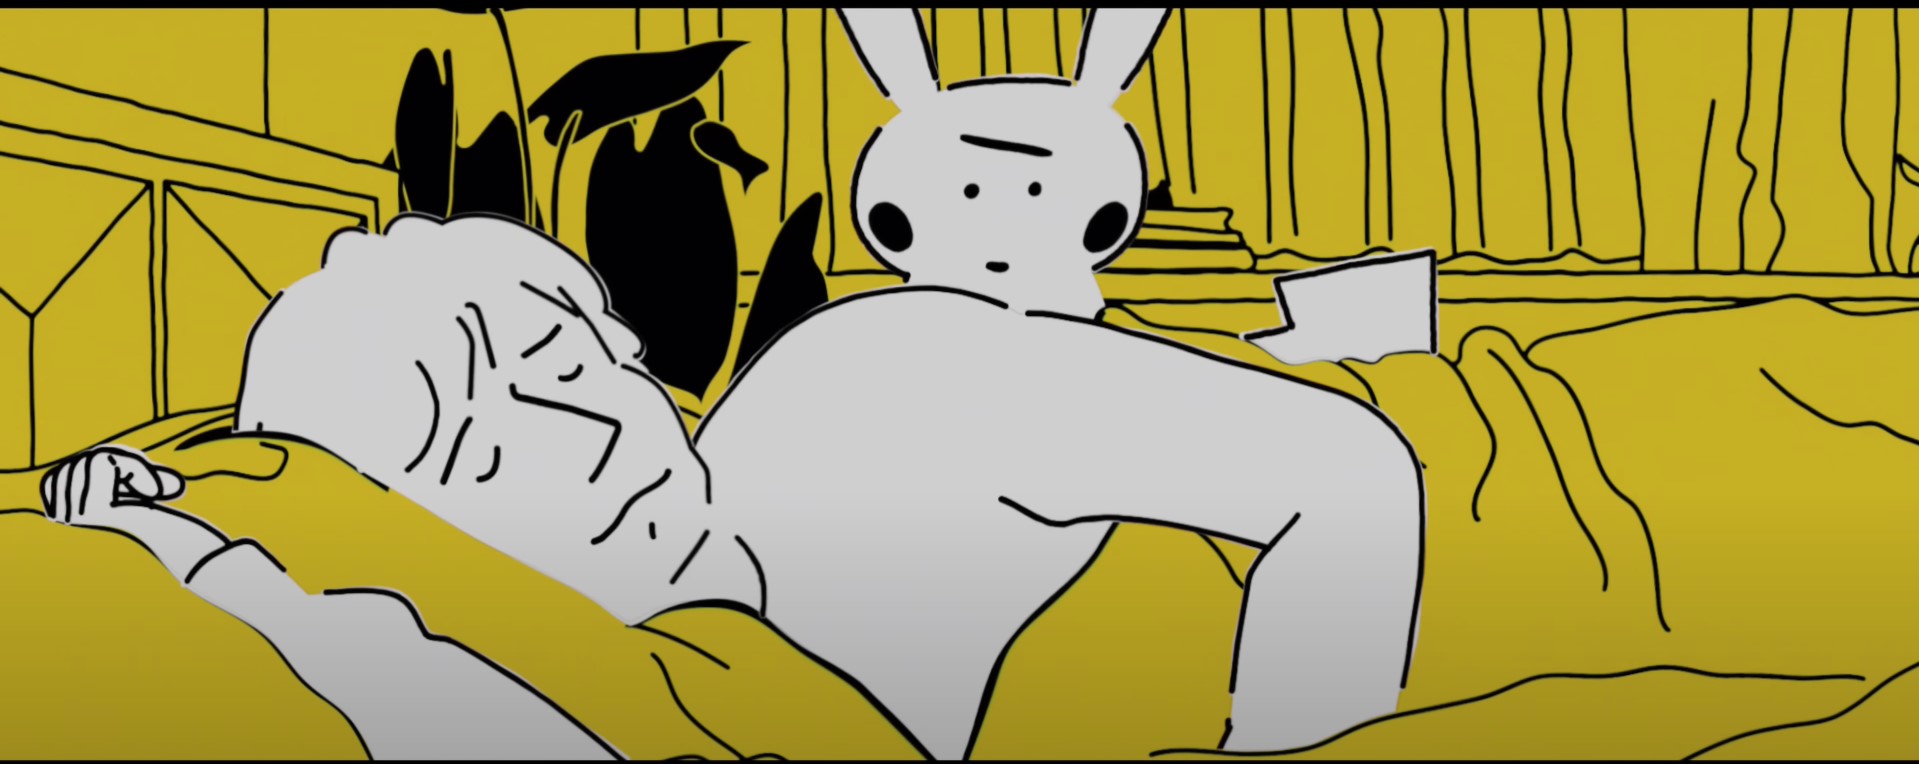 Pikachu shown in Ed Sheeran's Celestial